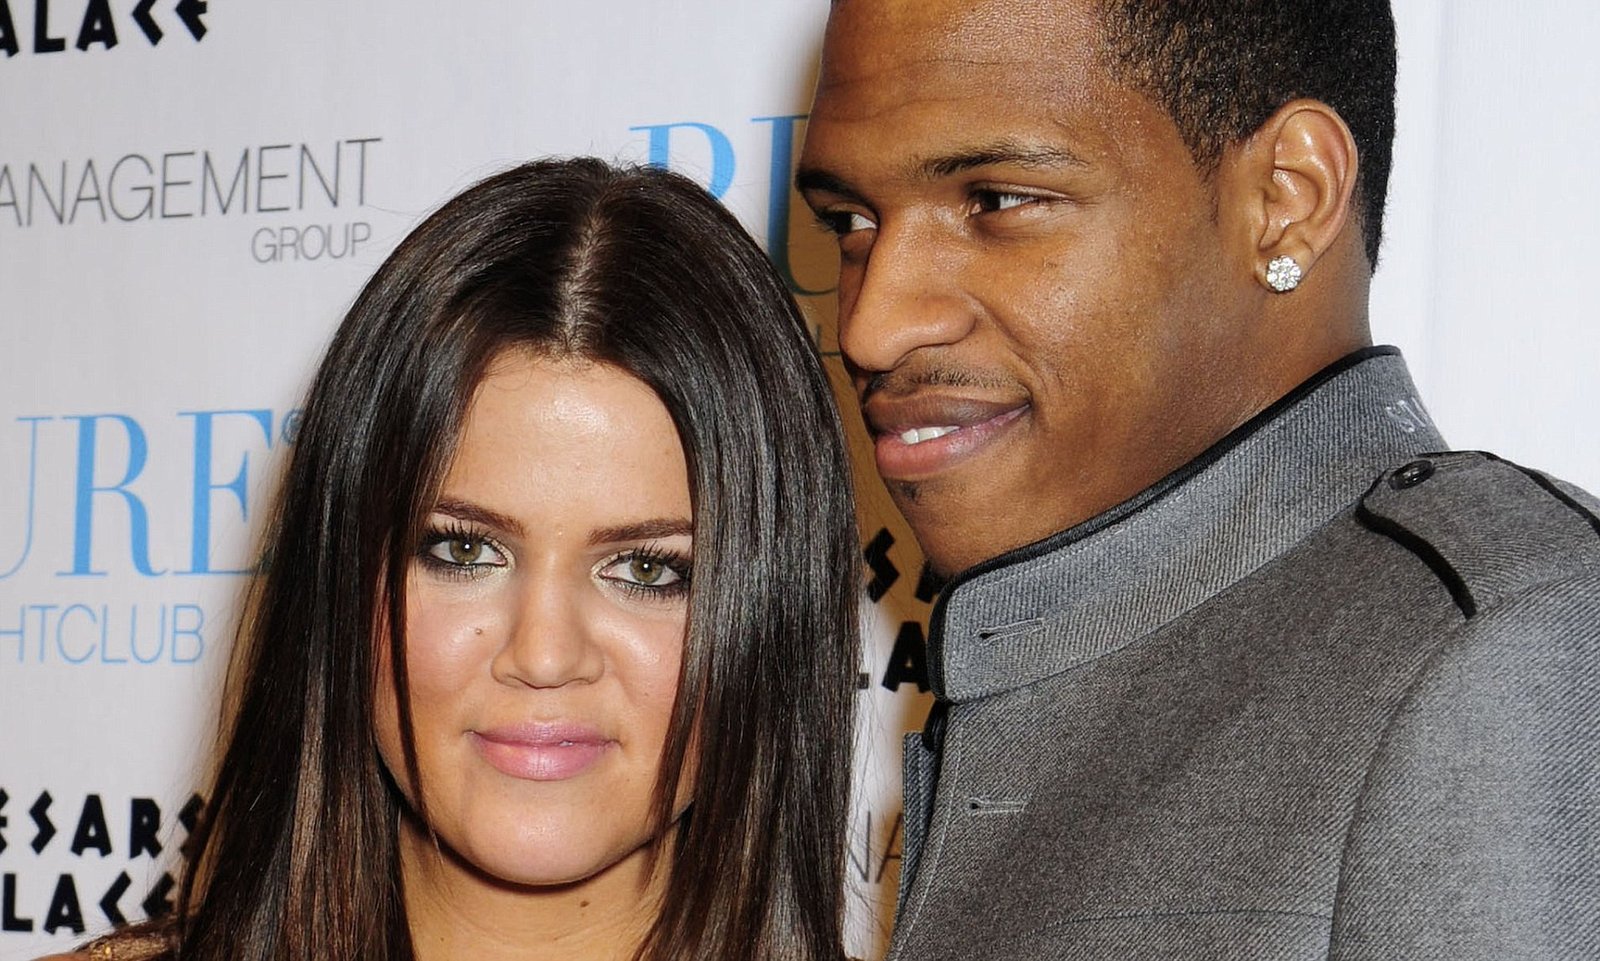 How many NBA players dated Kardashians? Latest Sports News Africa